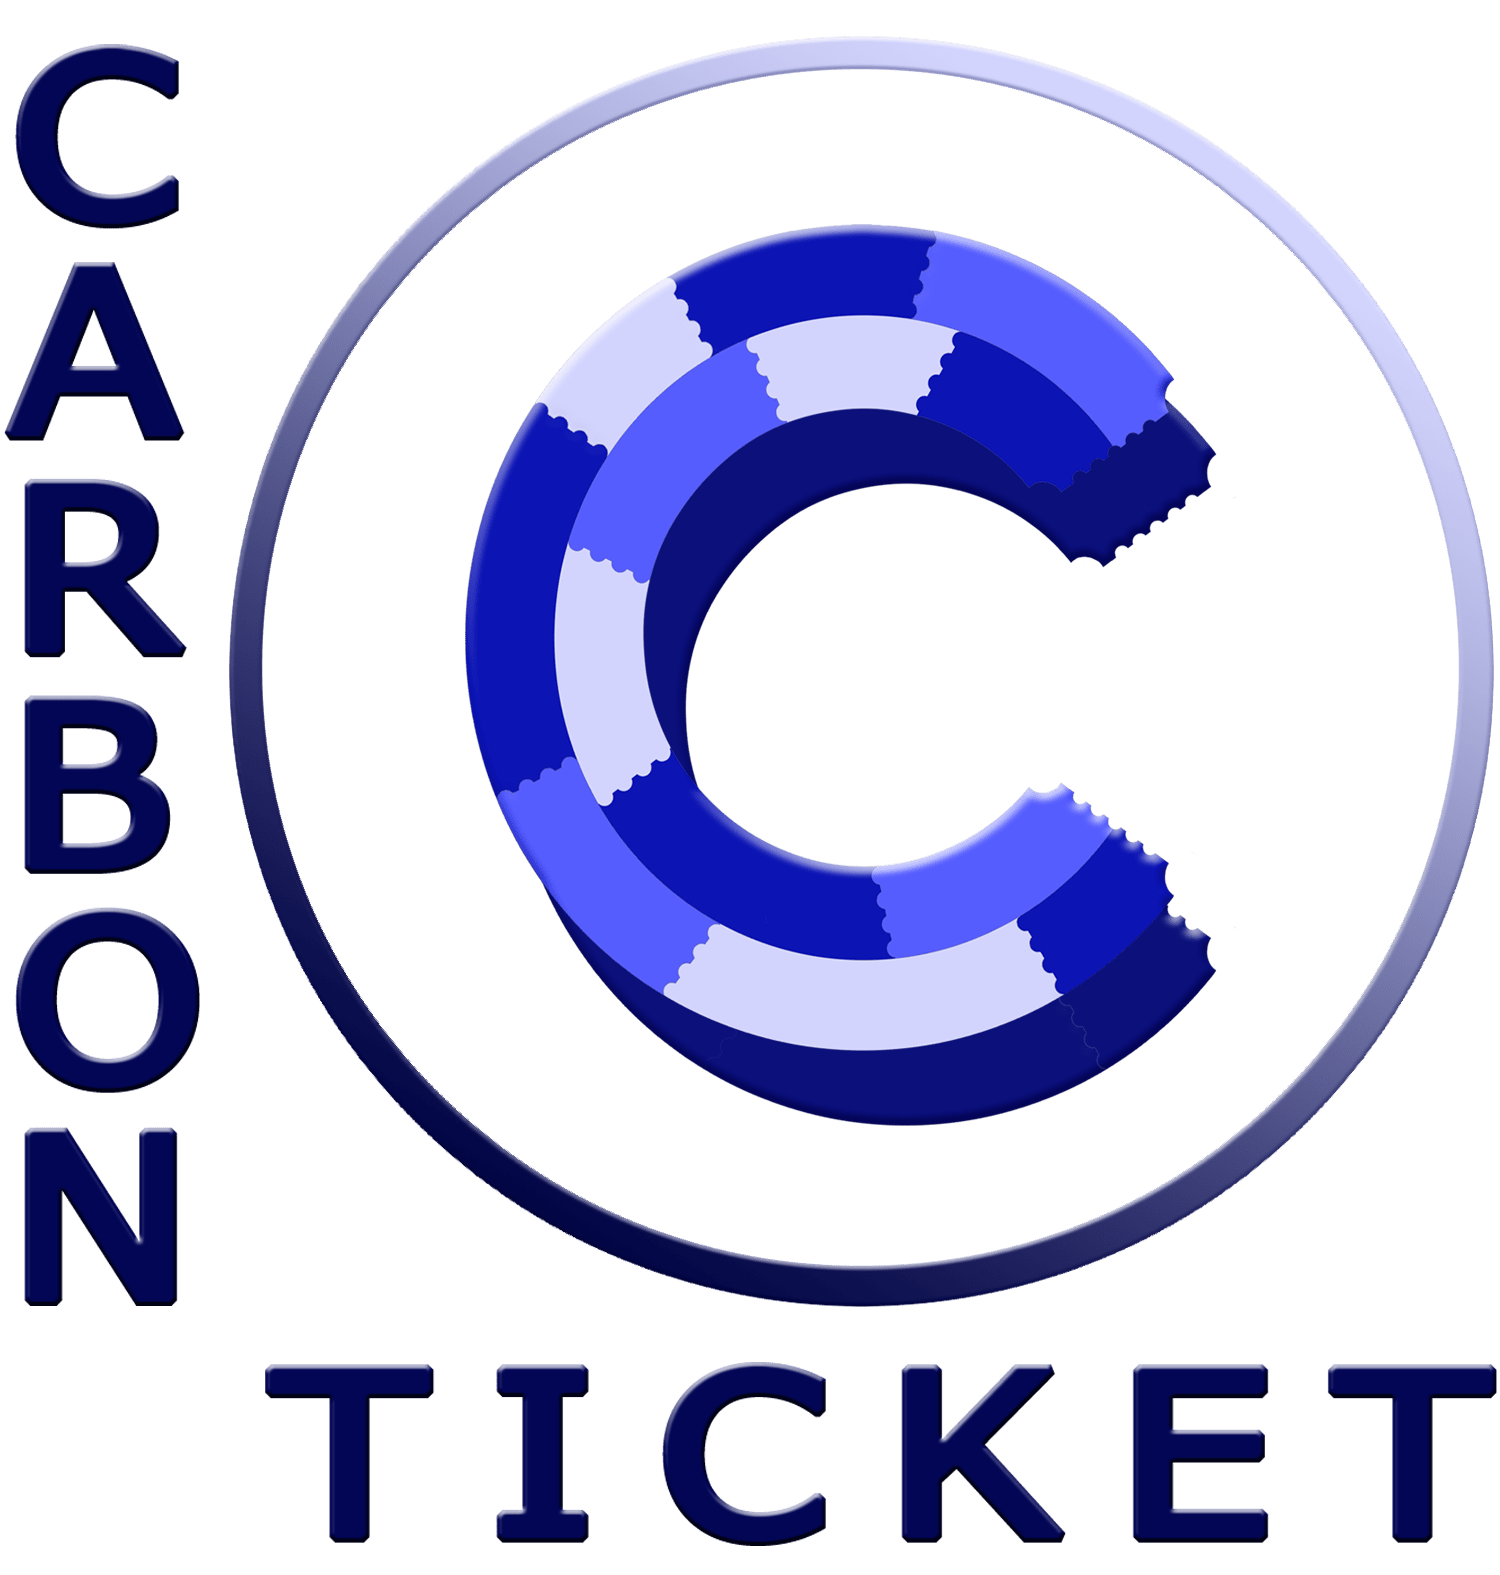 Carbon Ticket